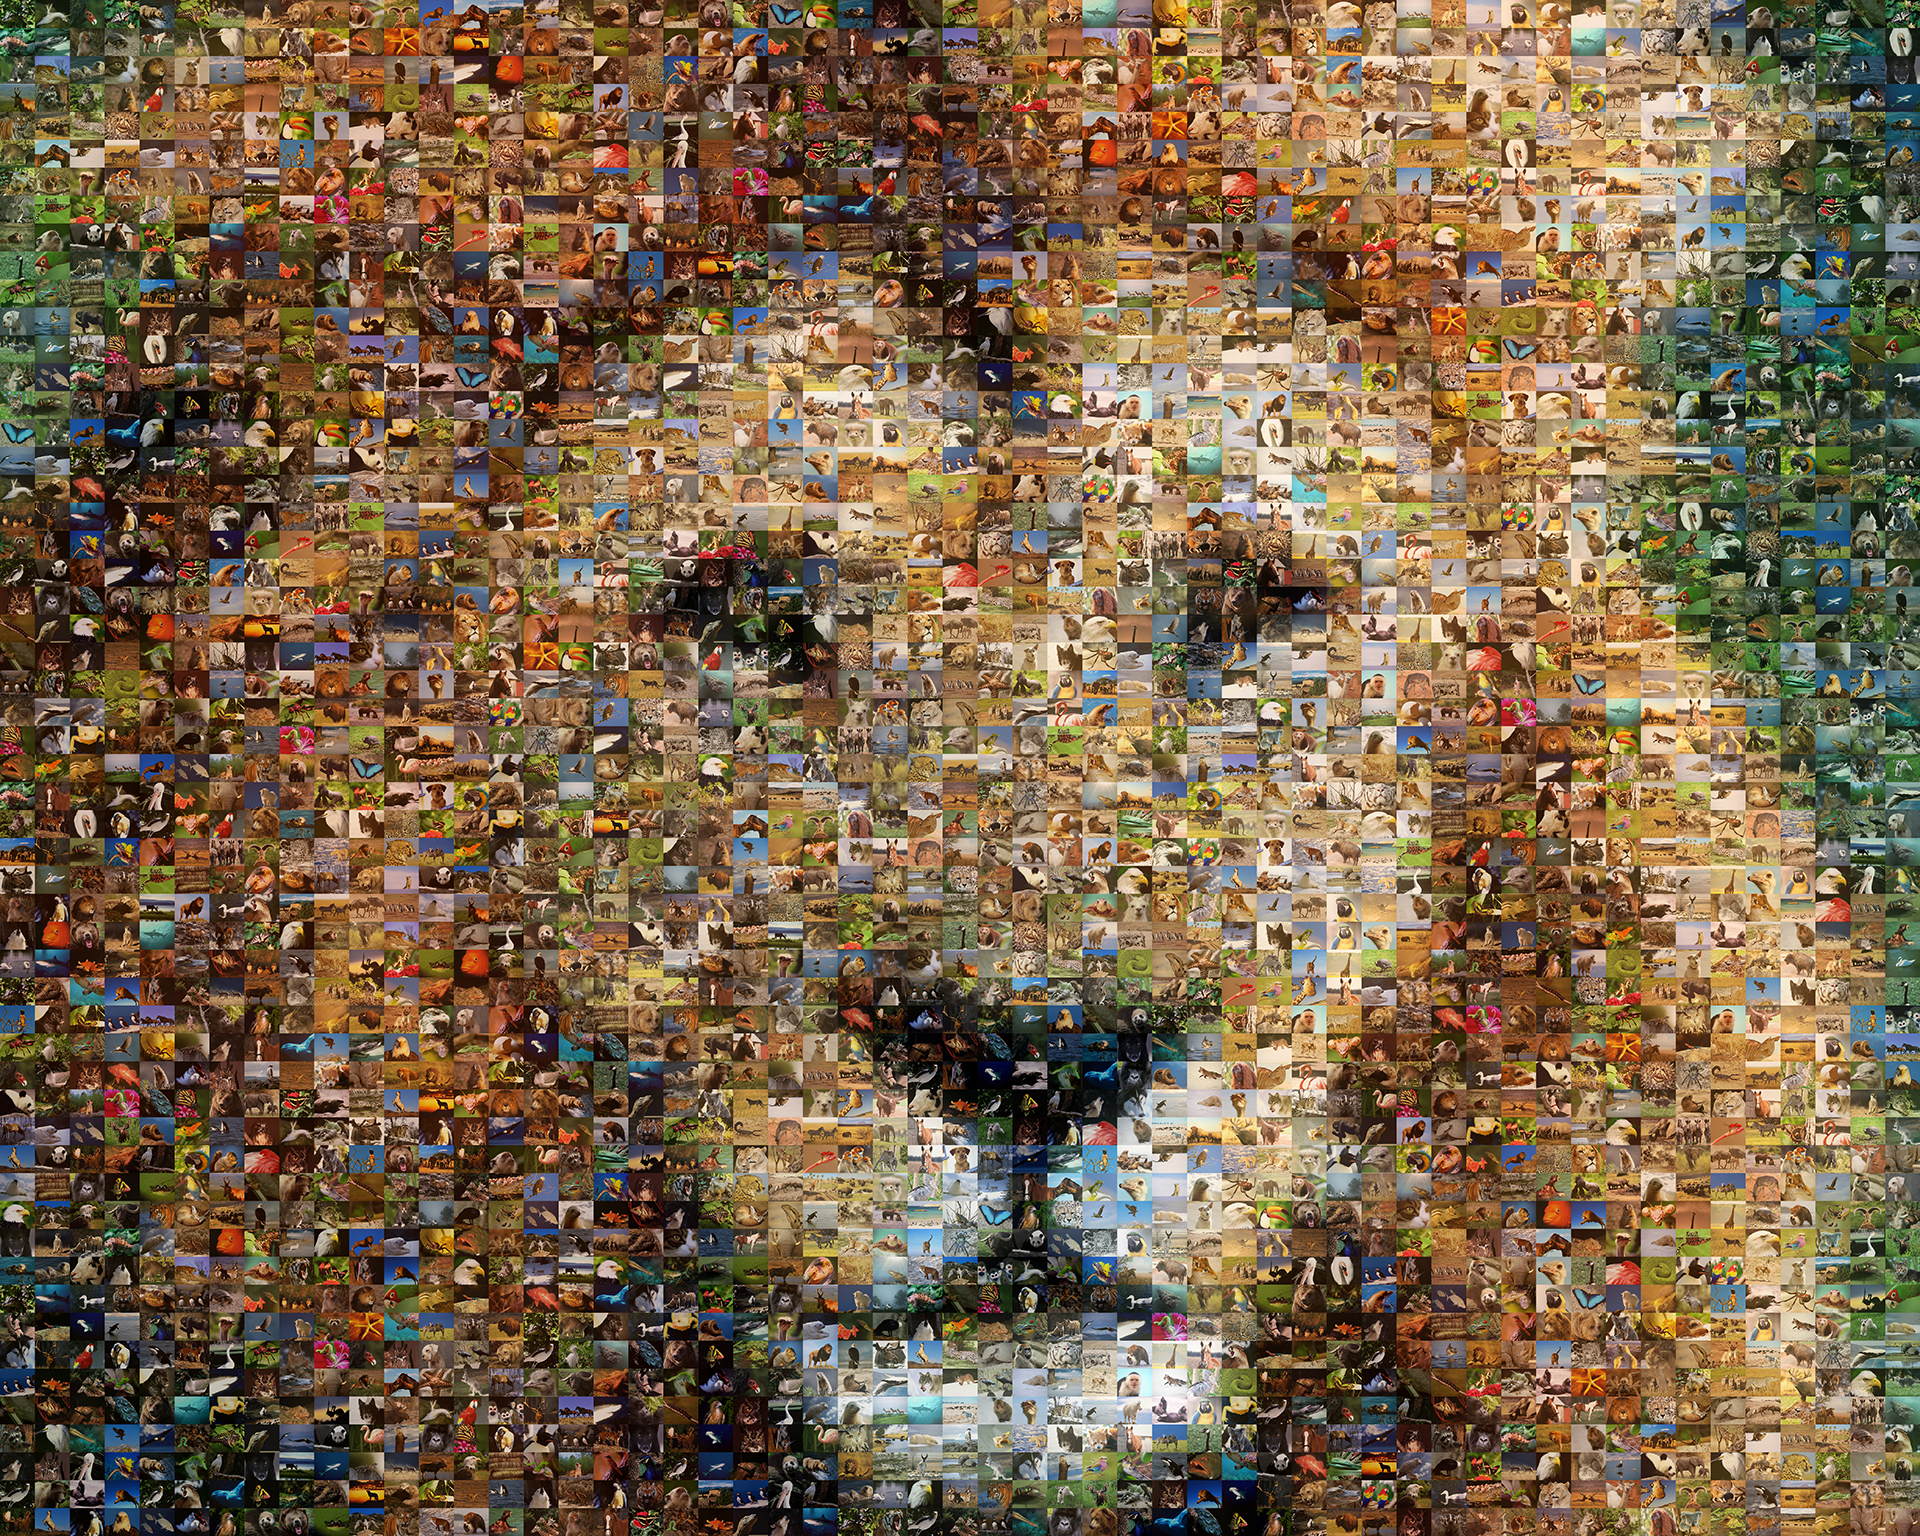 photo mosaic created using over 600 unique photos of animals and wildlife